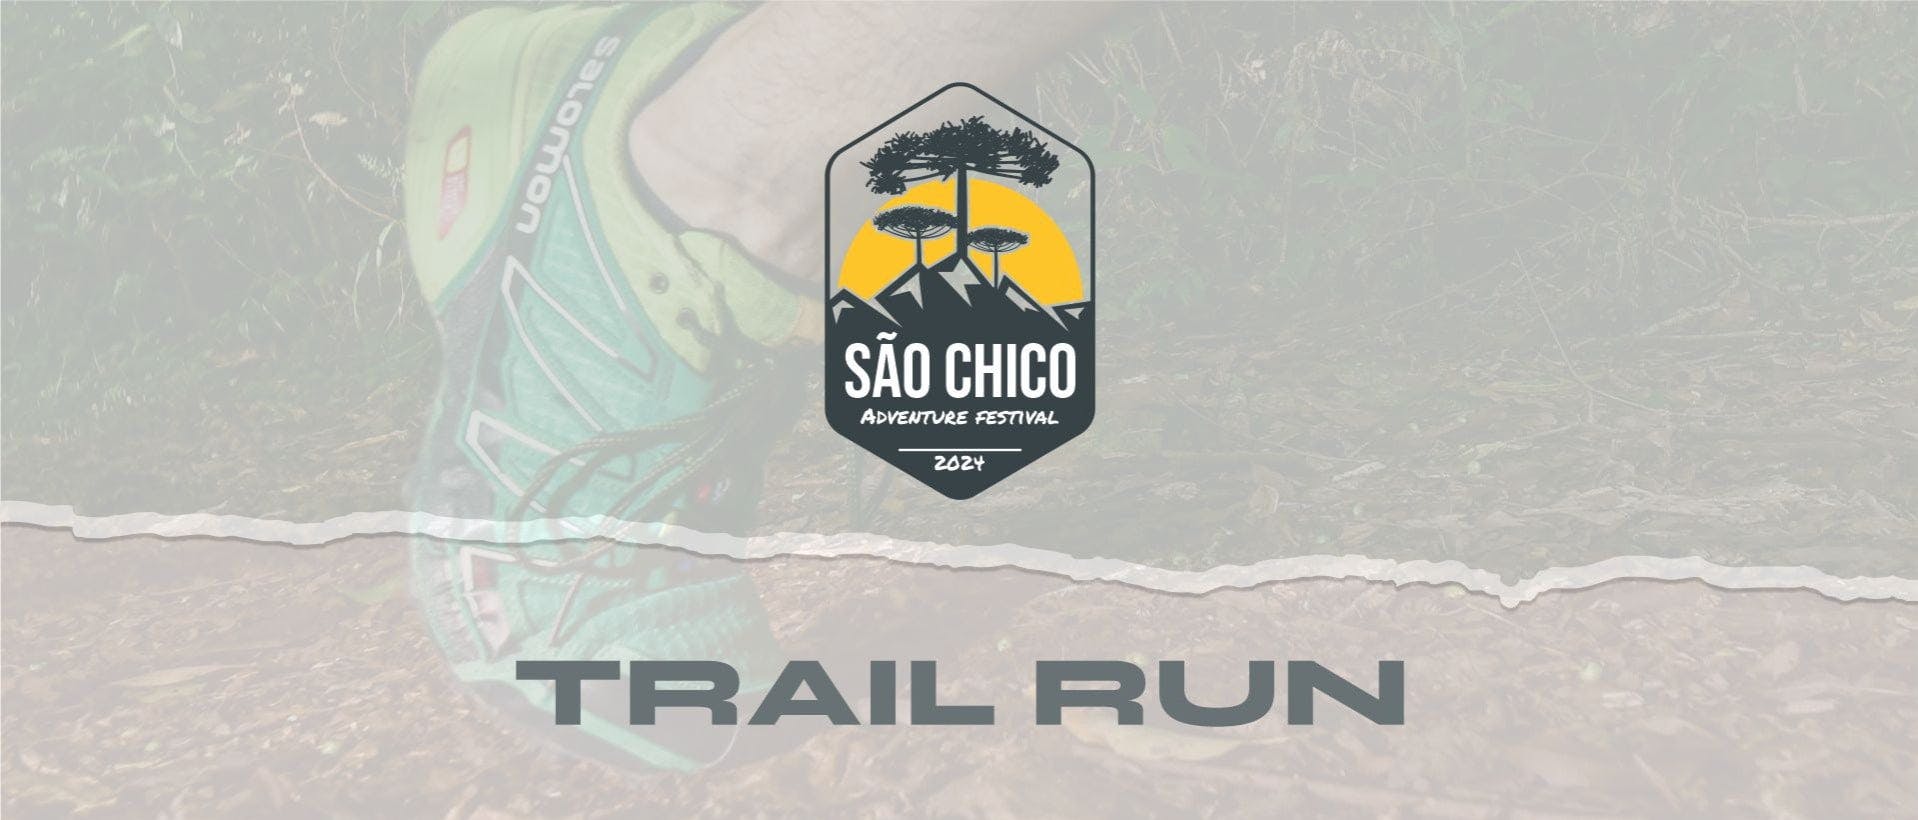 São Chico Adventure Festival - TrailRun